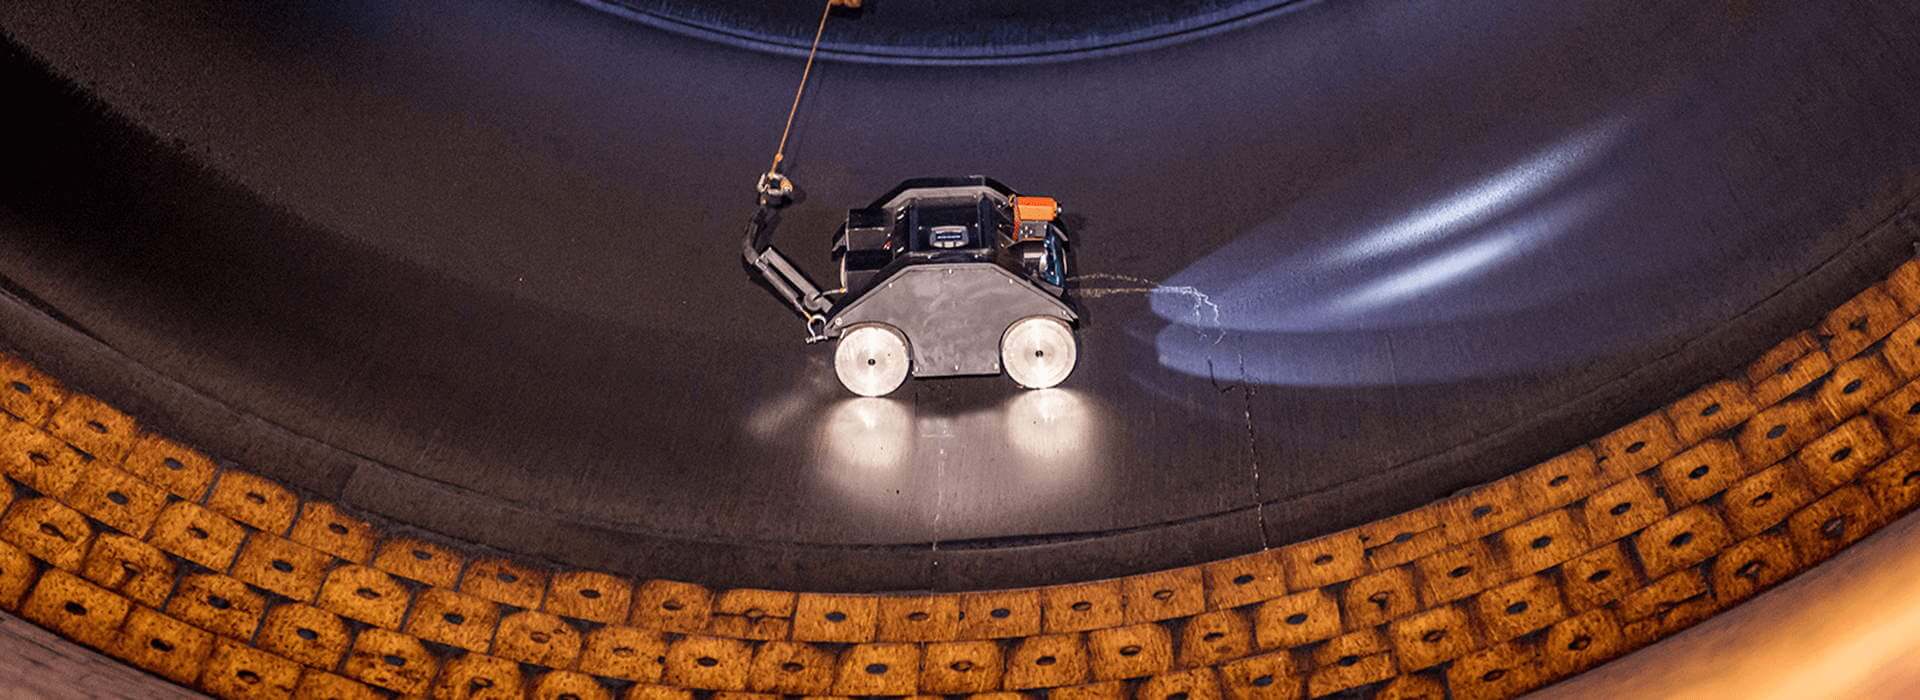 Astec Silobot robot inspecting an asphalt storage silo.